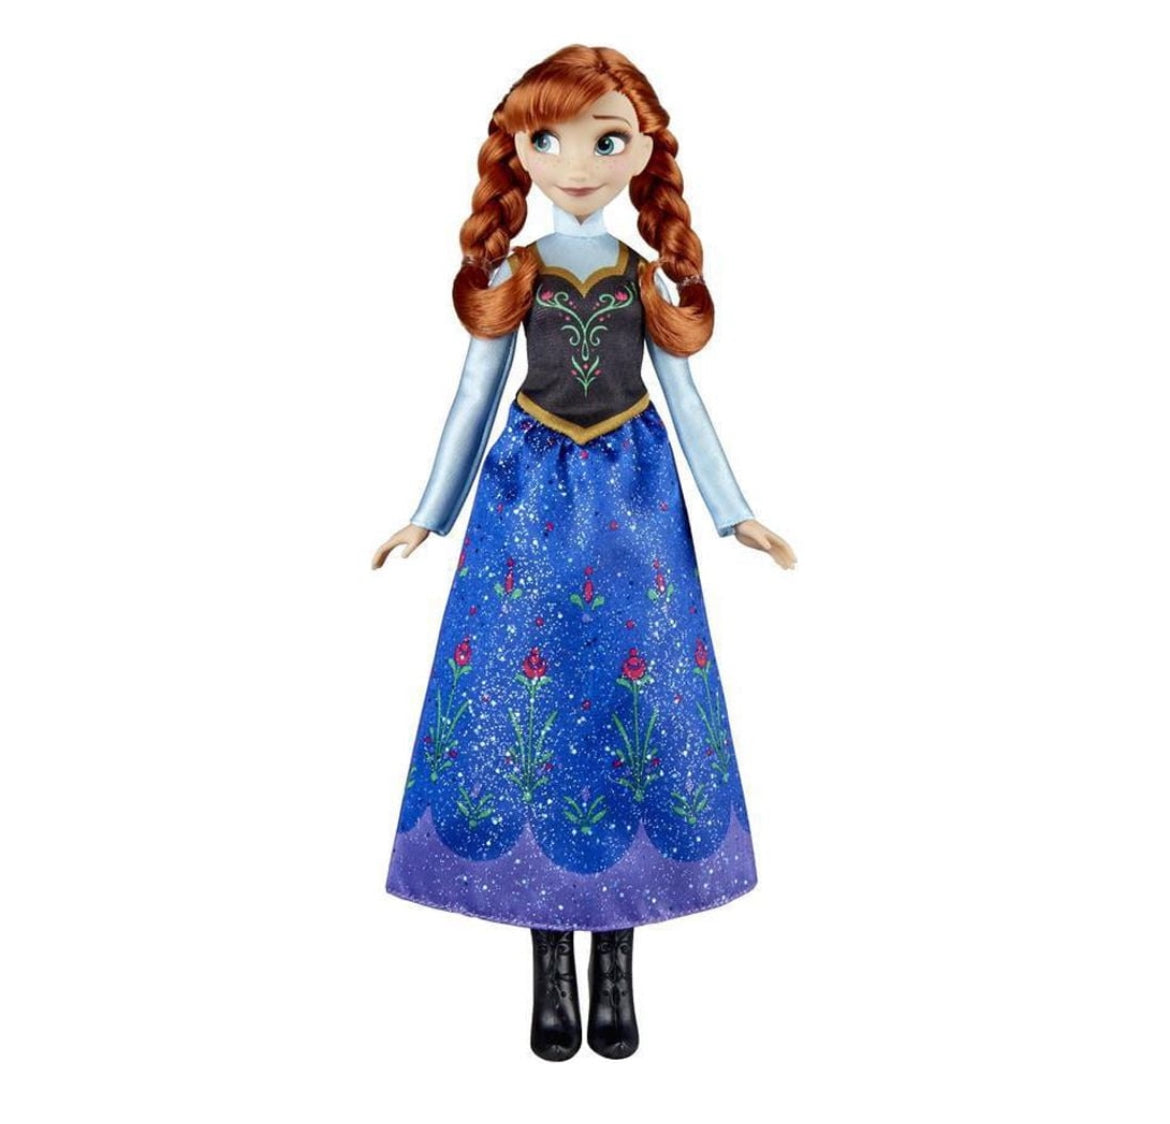 Disney Frozen Anna Classic Fashion Doll 92705